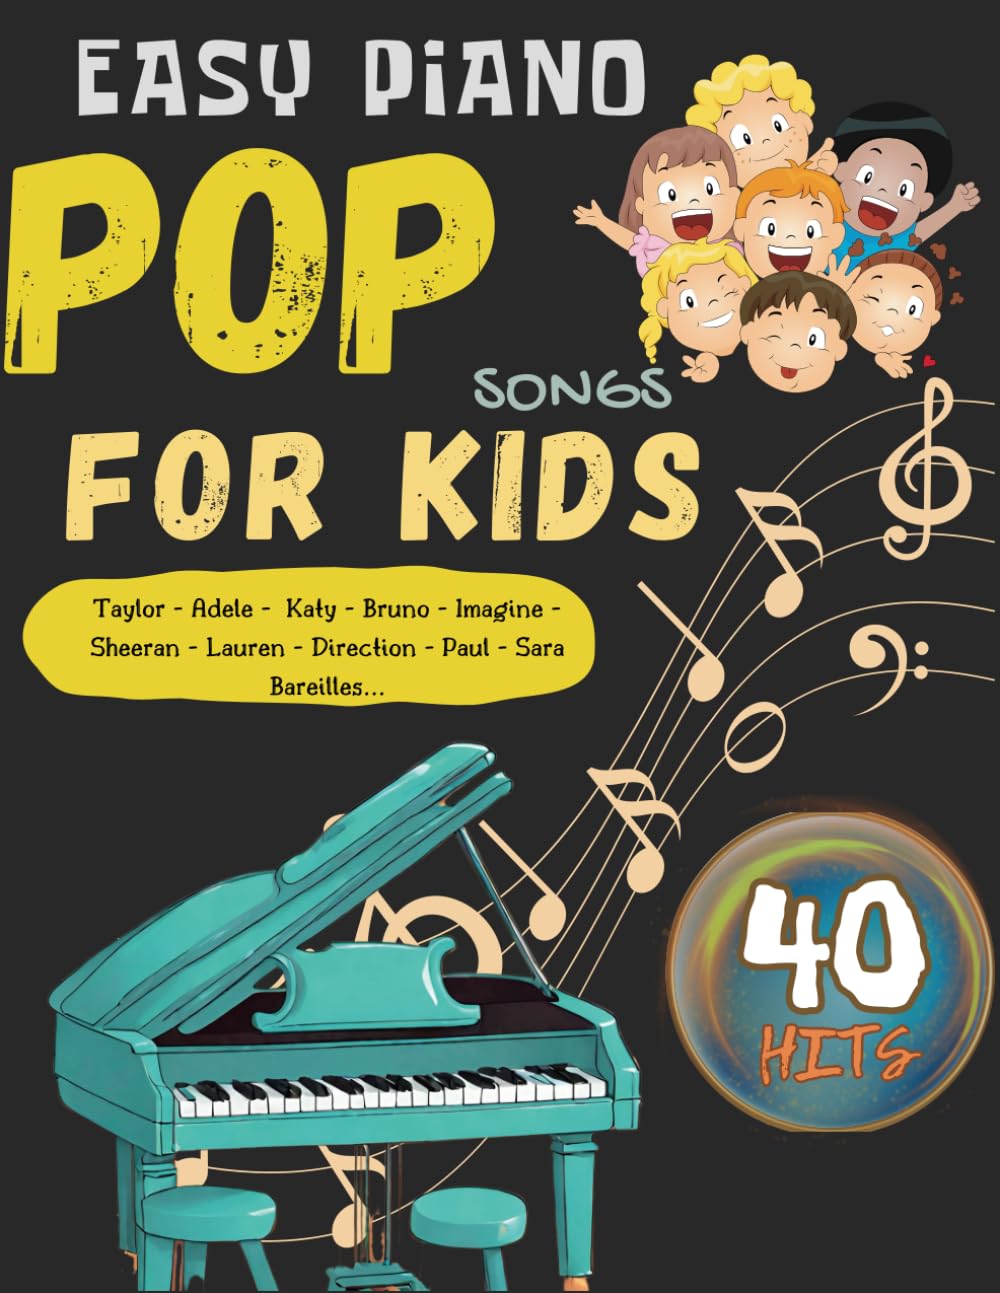 piano books for kids7